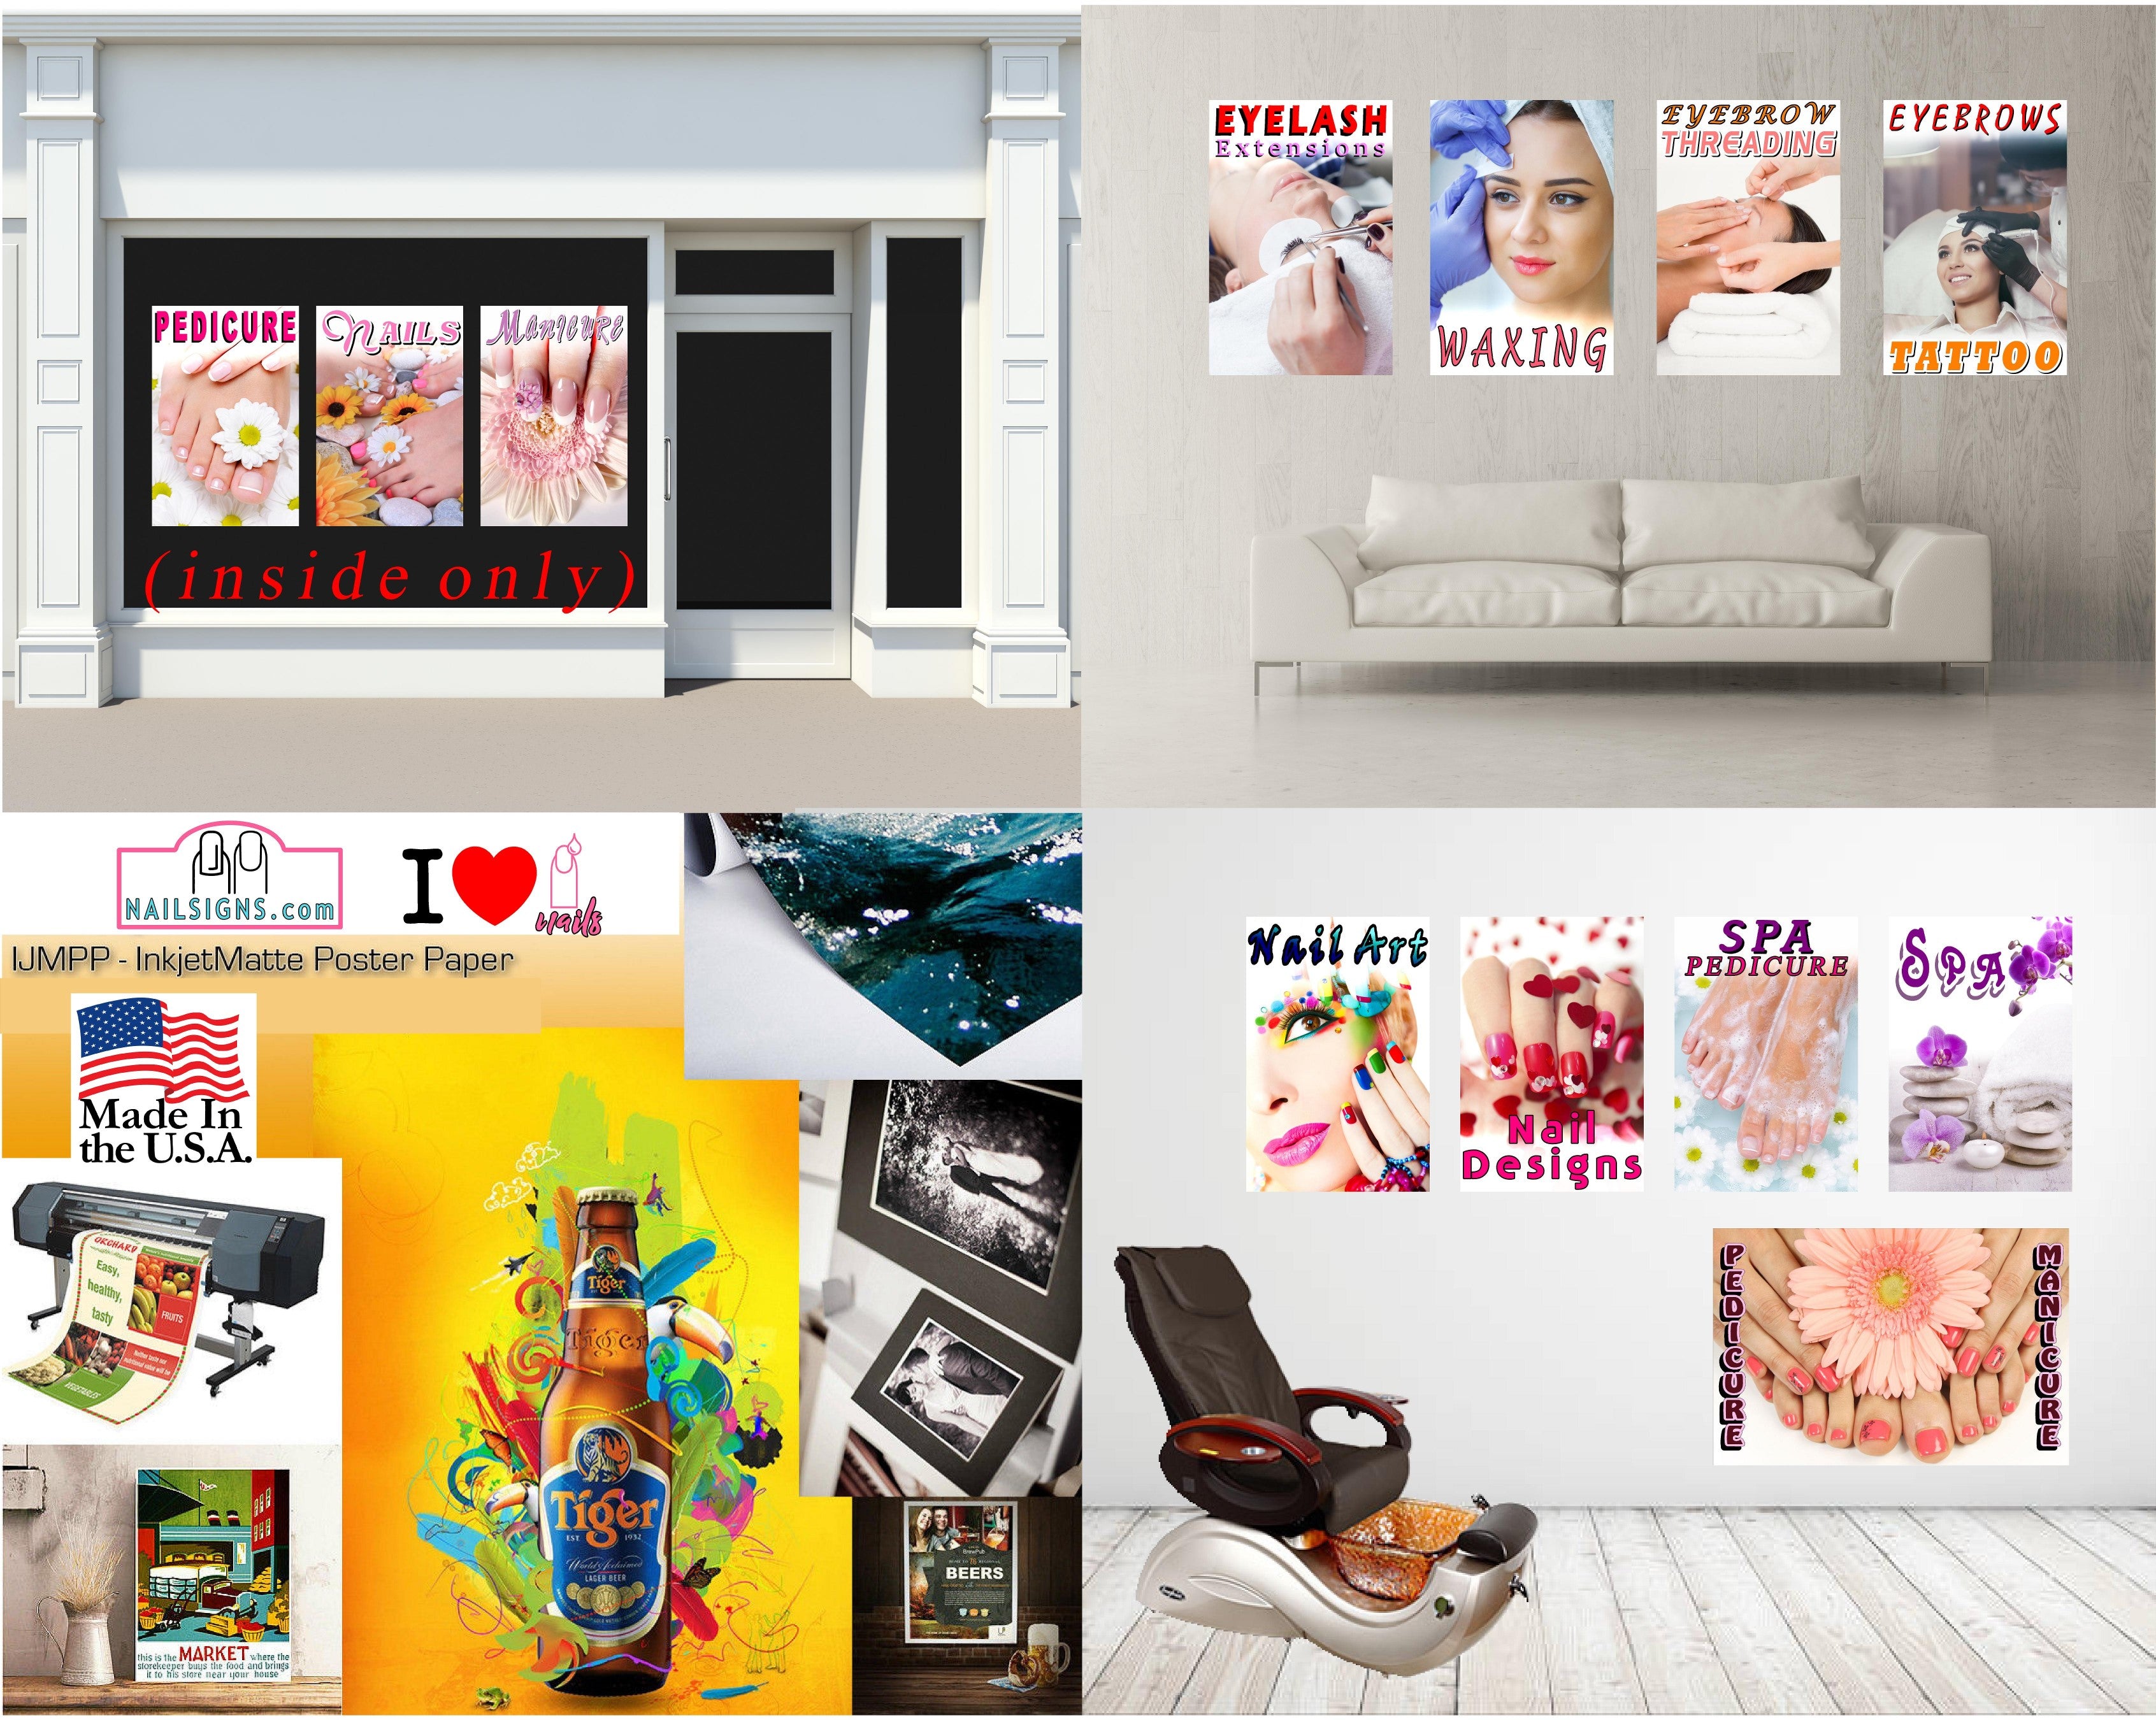 Pedicure & Manicure 01 Photo-Realistic Paper Poster Premium Matte Interior Inside Sign Adverting Marketing Wall Window Non-Laminated Horizontal